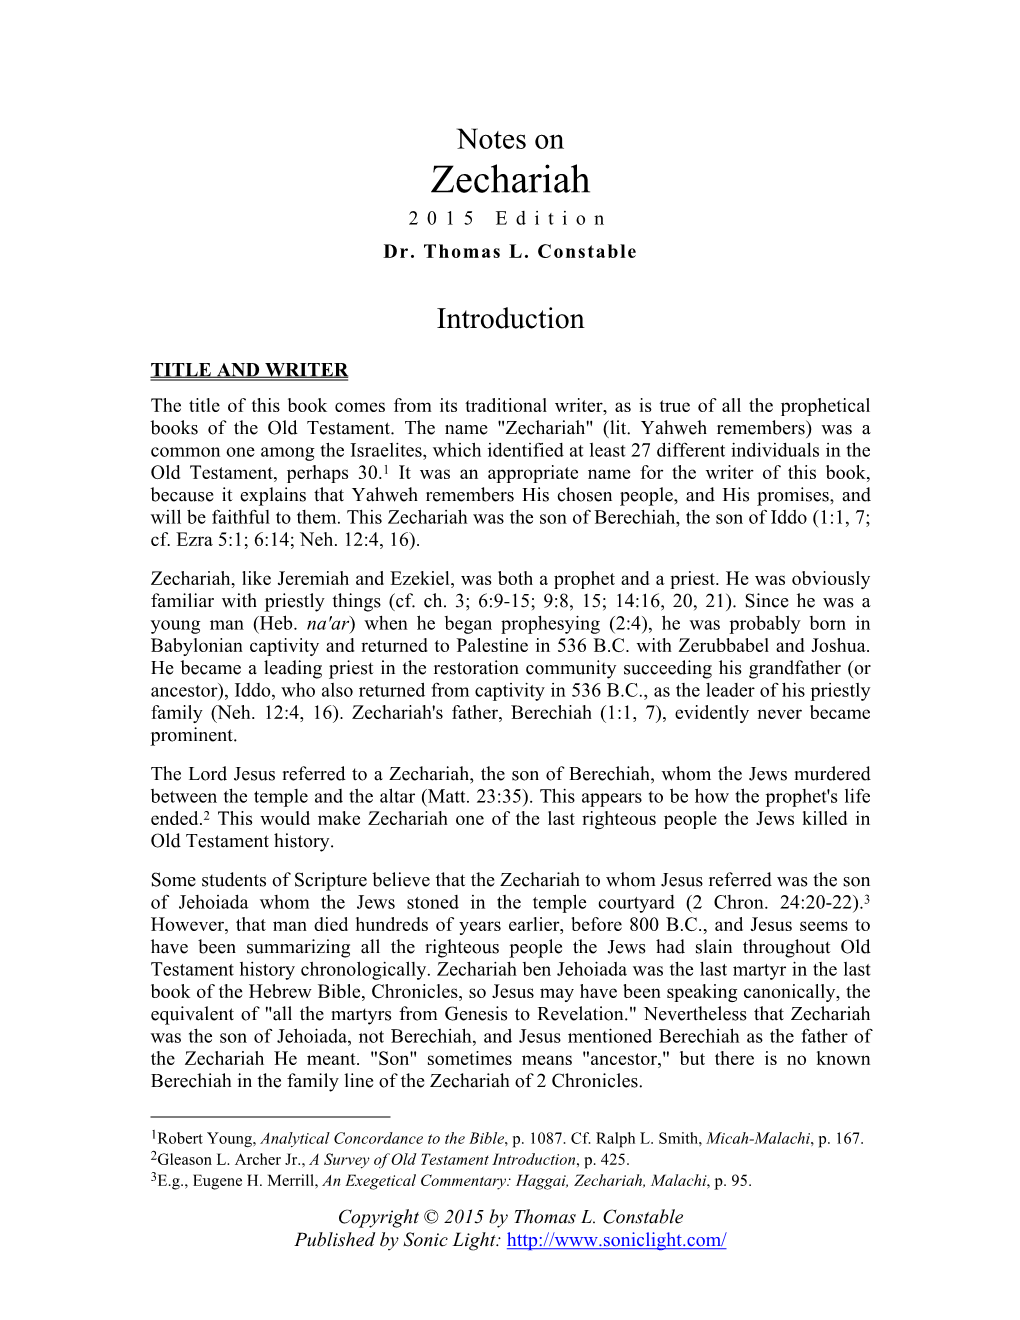 Zechariah 2015 Edition Dr